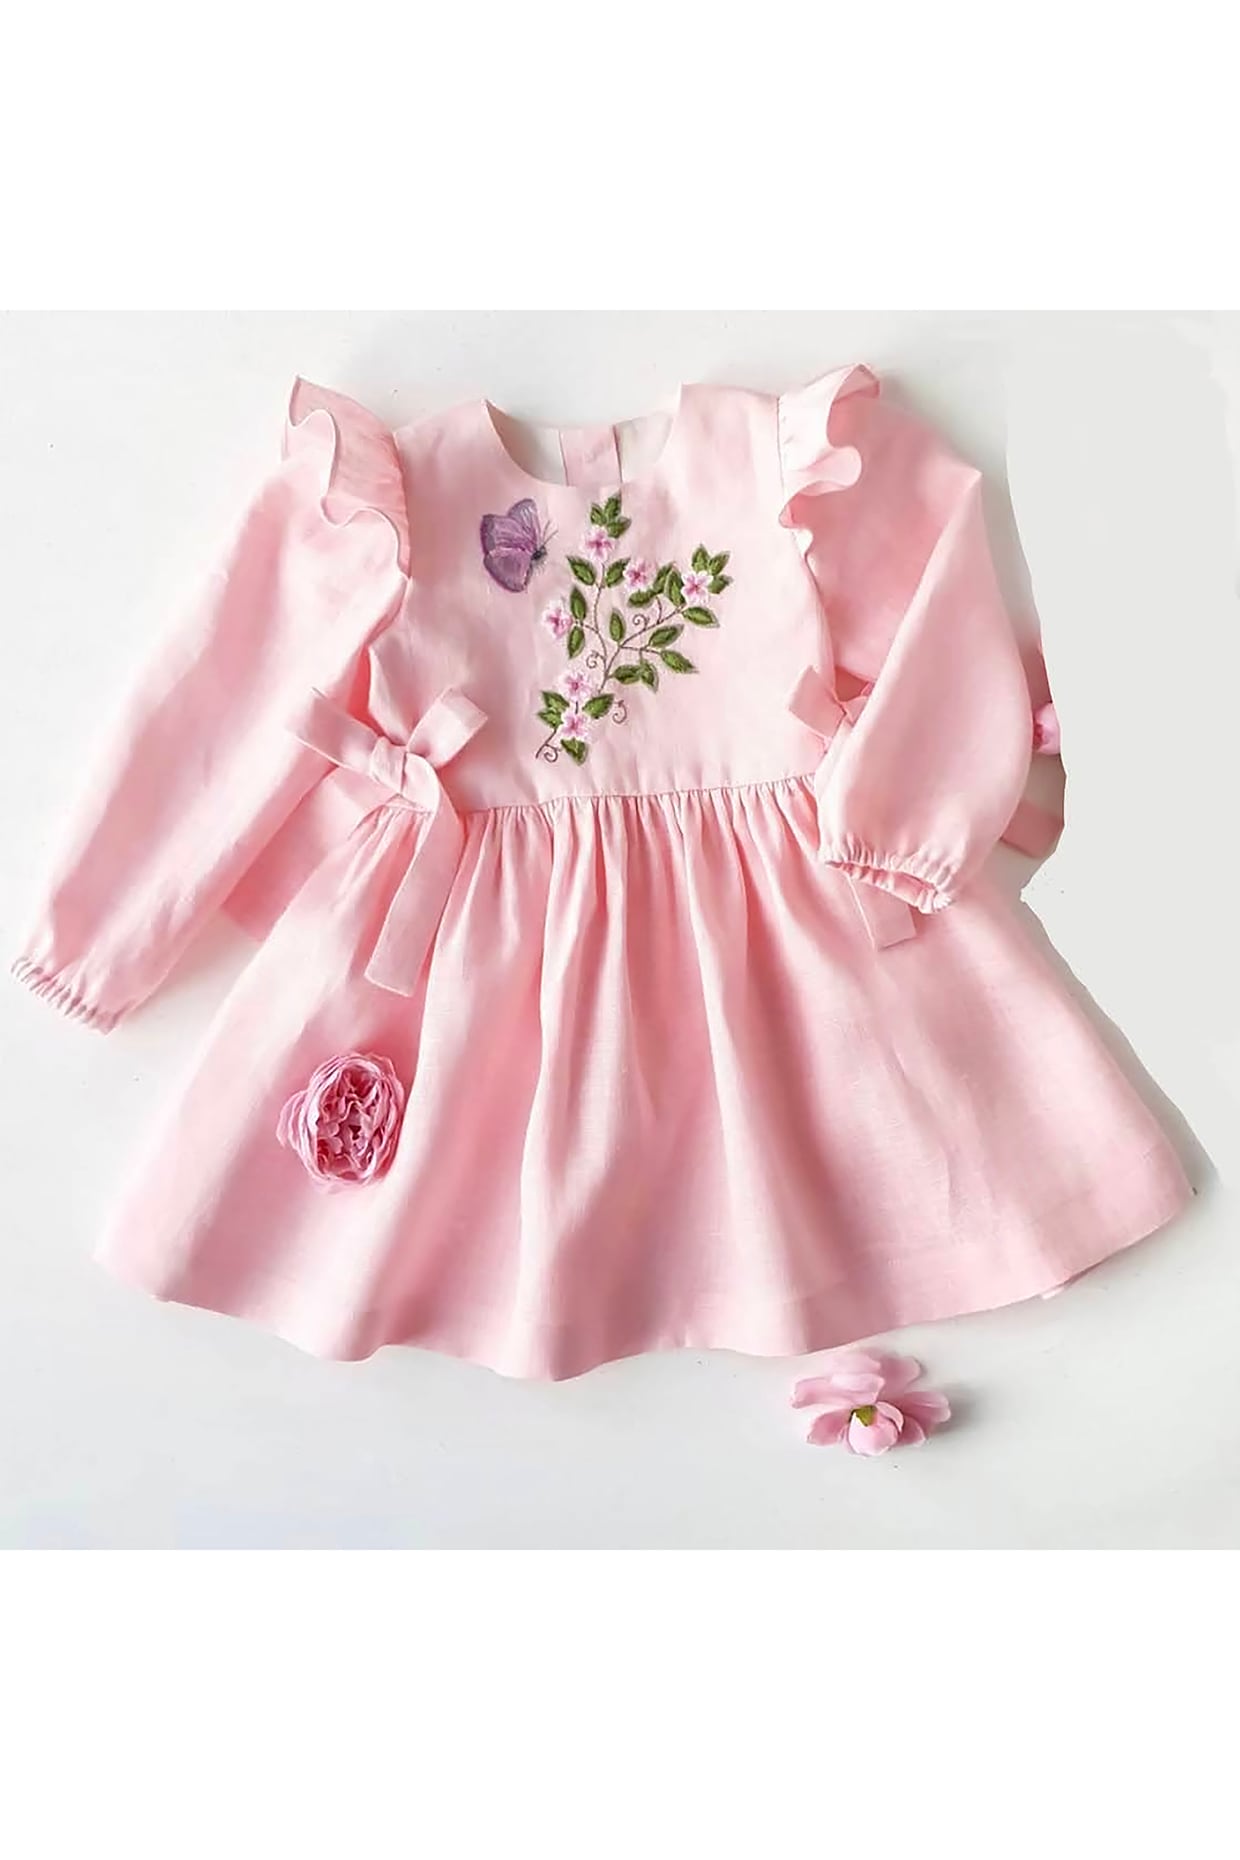 Maryellen's Pretty Pink Dress for 18-inch Dolls | American Girl